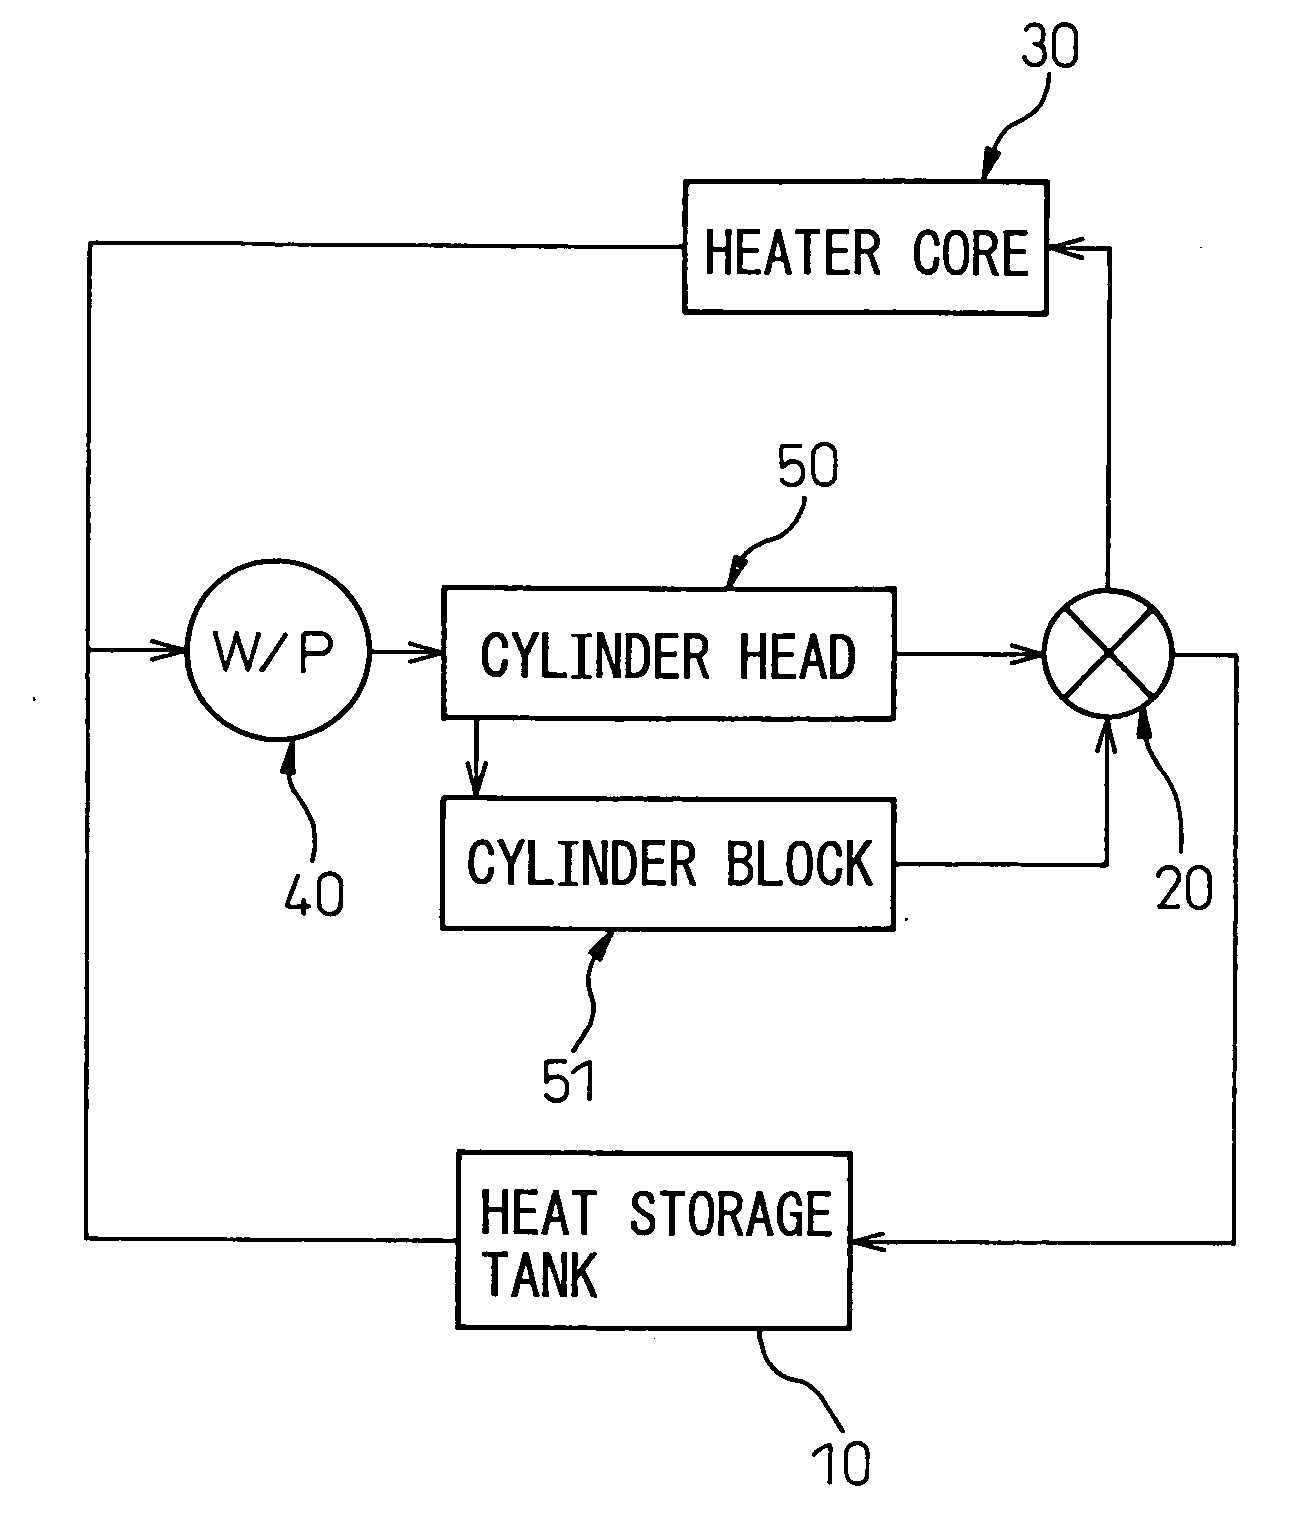 Heat storage tank